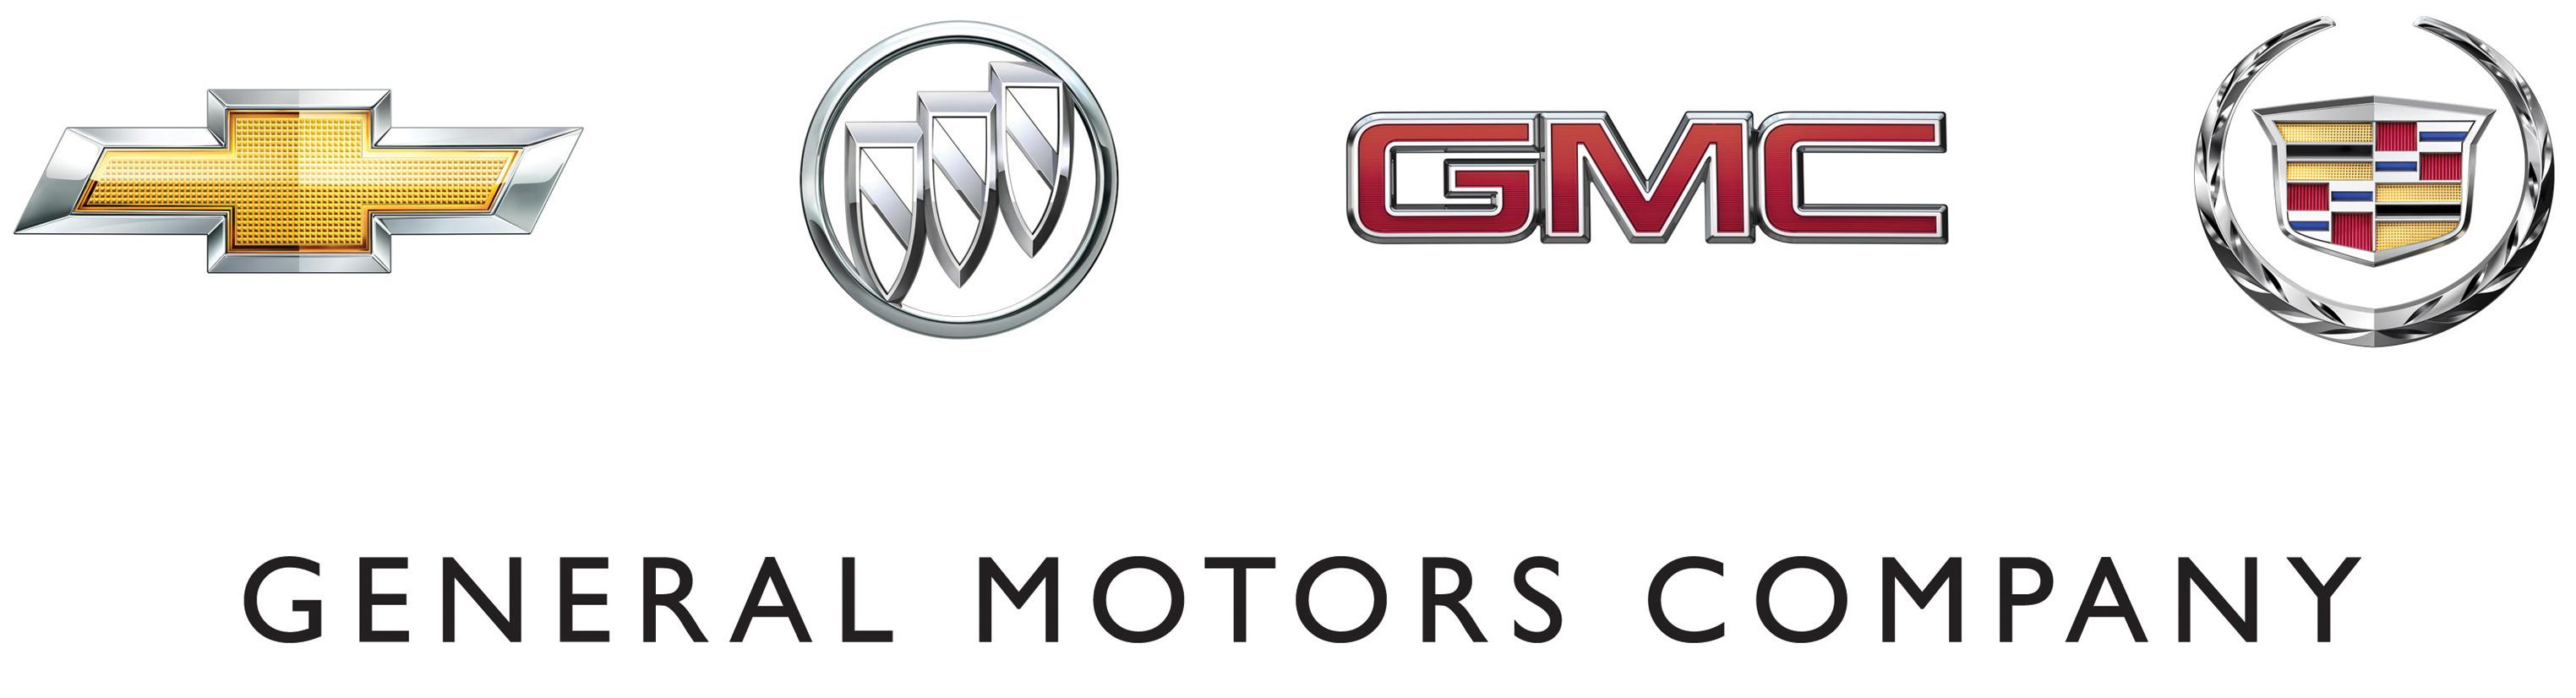 GM Car Logo - Gm Car Brands.co